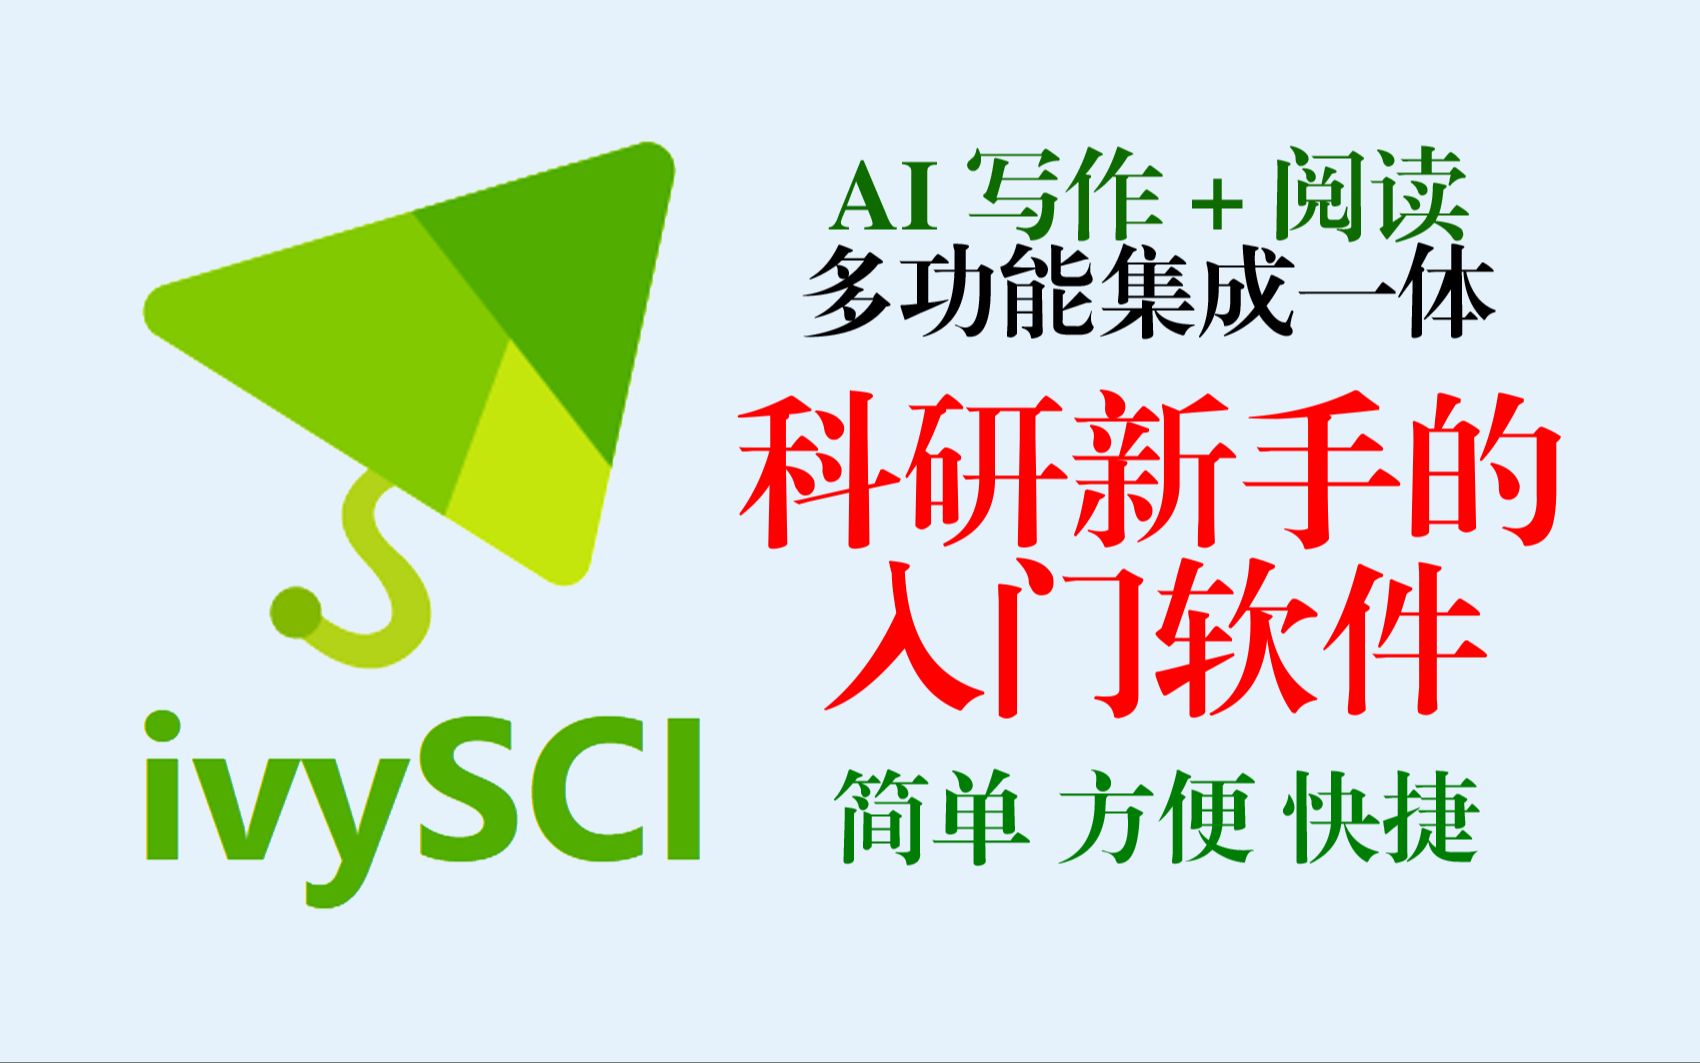 ivySCI：简单便捷、集成一体的科研文献管理软件！